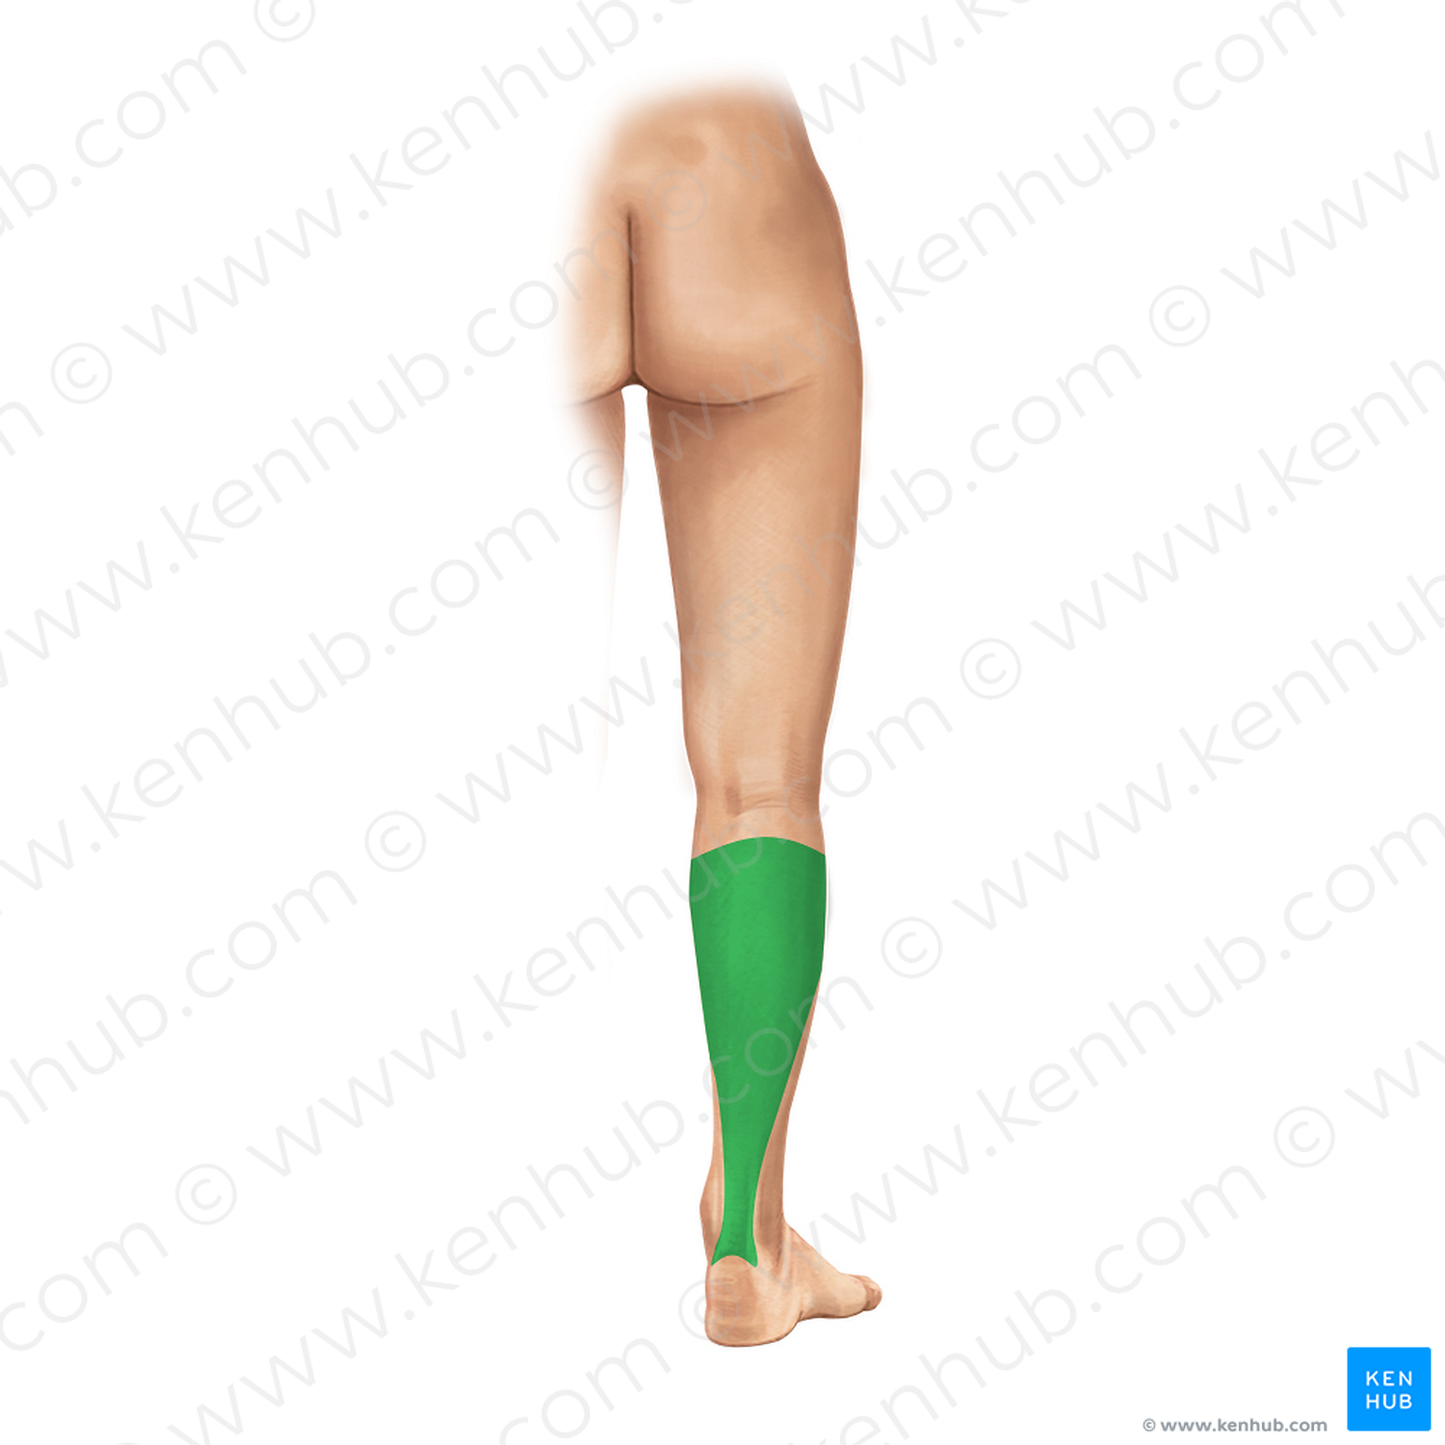 Posterior region of leg (#408)